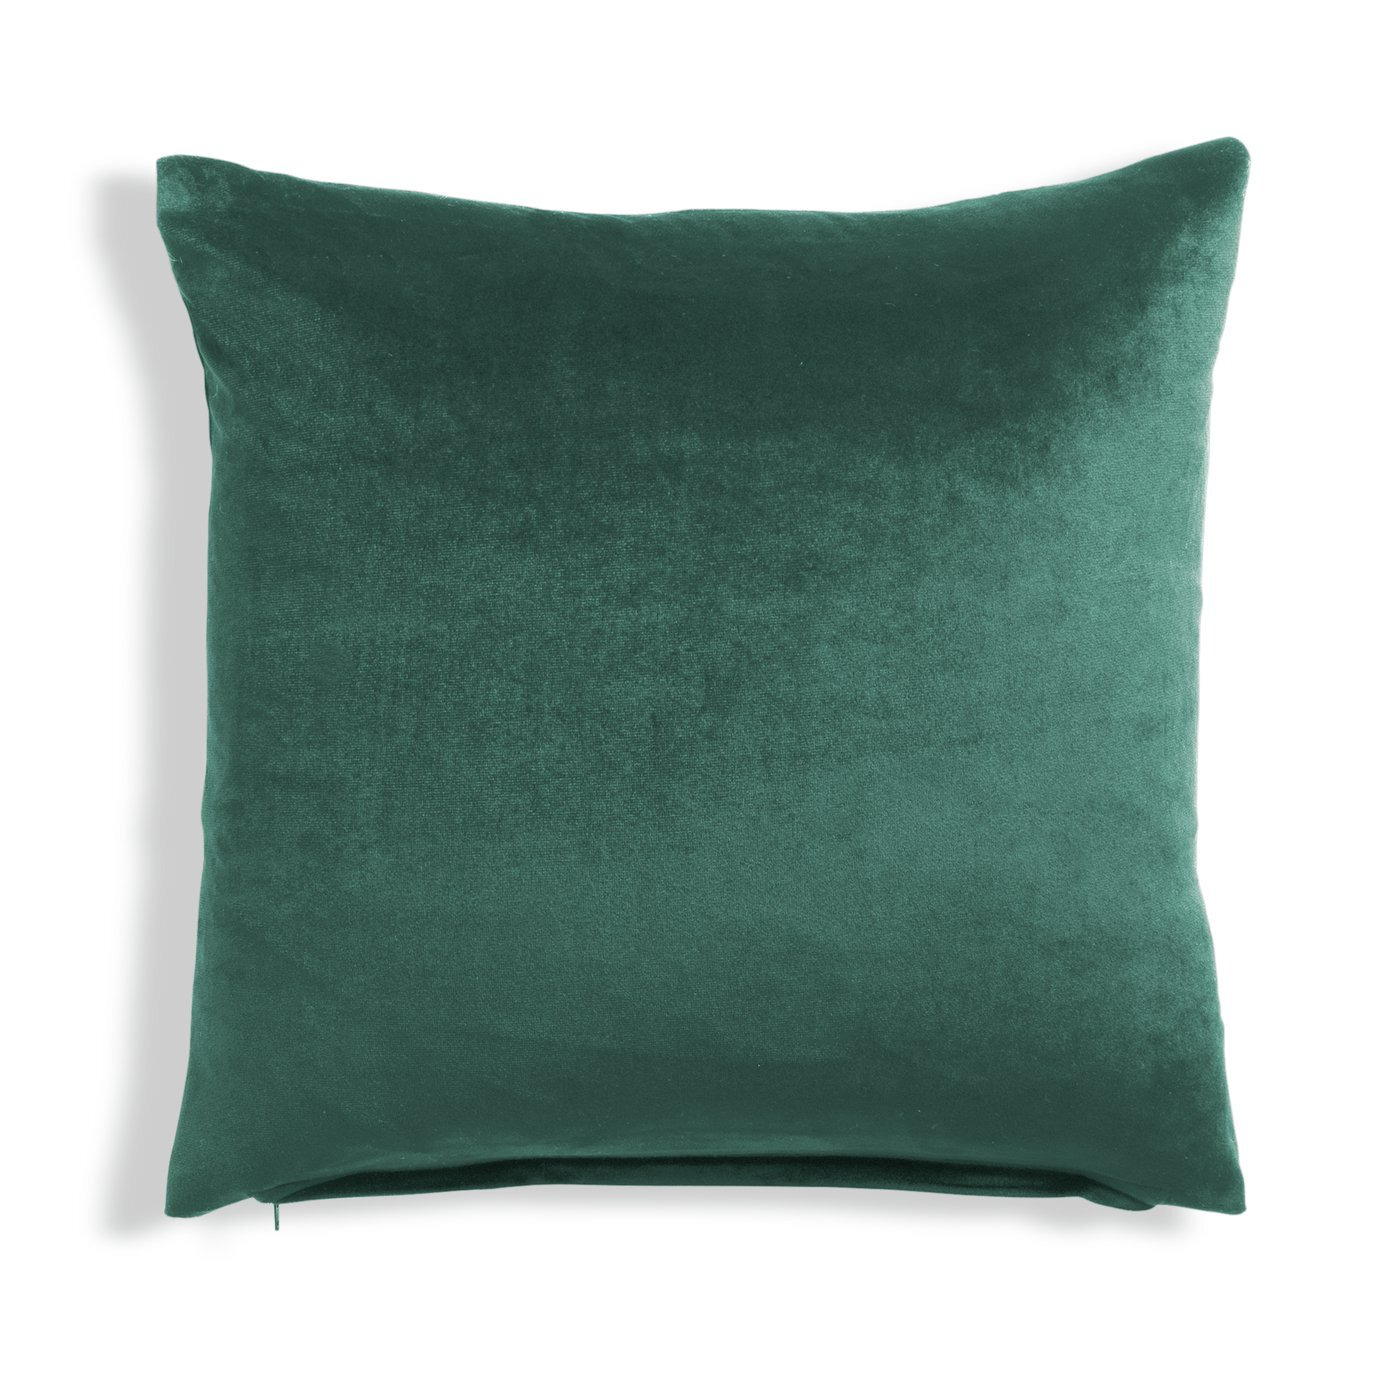 Habitat Velvet Cushion - Emerald - 43x43cm - image 1